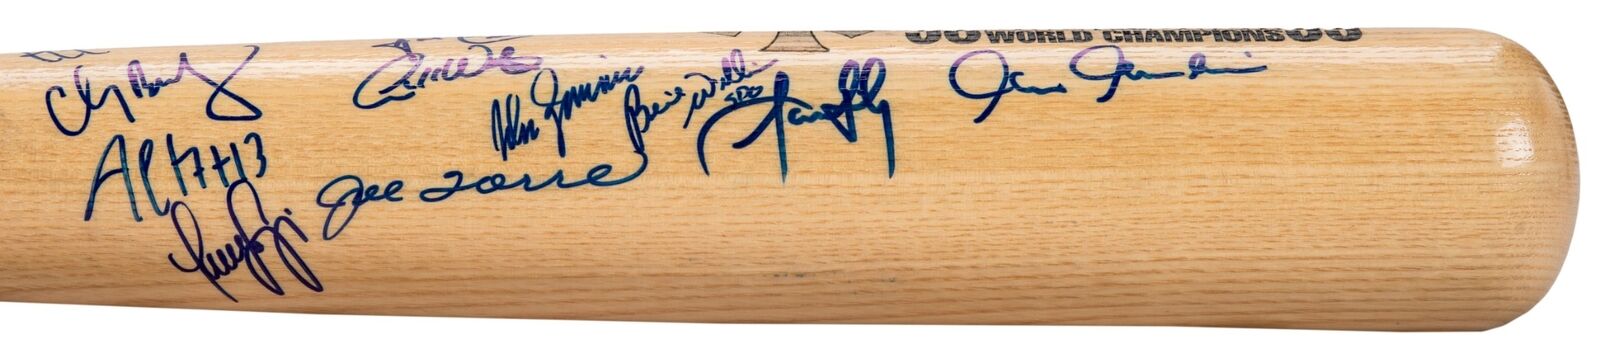 1998 1999 NY Yankees World Series Champs Team Signed Bat Derek Jeter Beckett COA